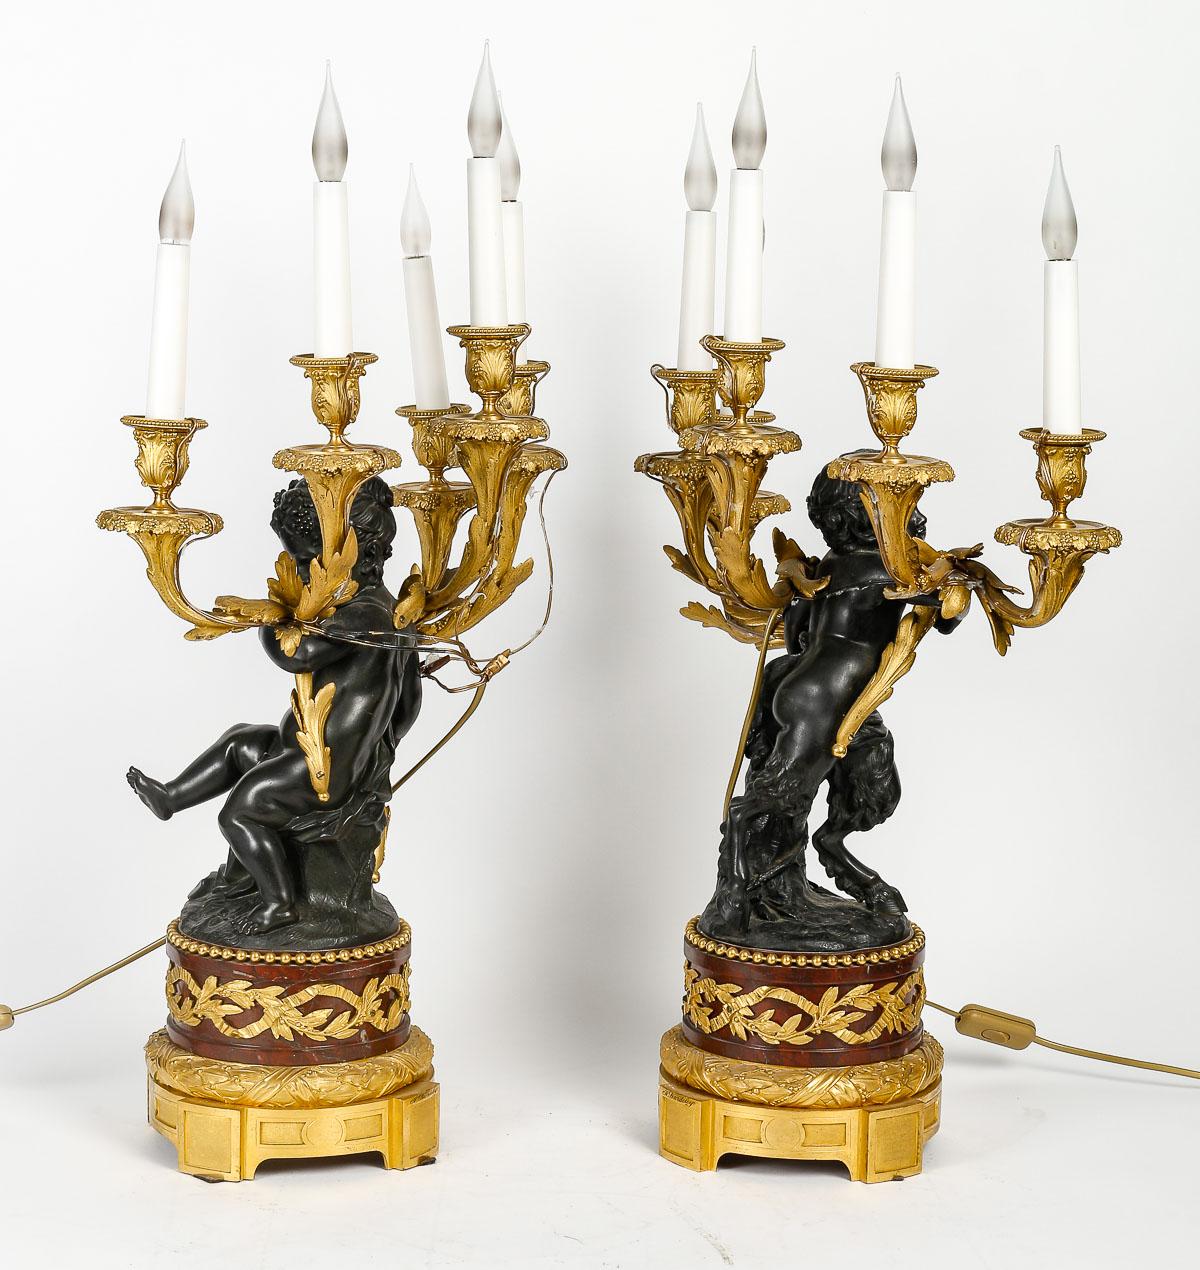 Pair of Amours Candelabra, Grande décoration, Gilt bronze, Antique bronze. 2